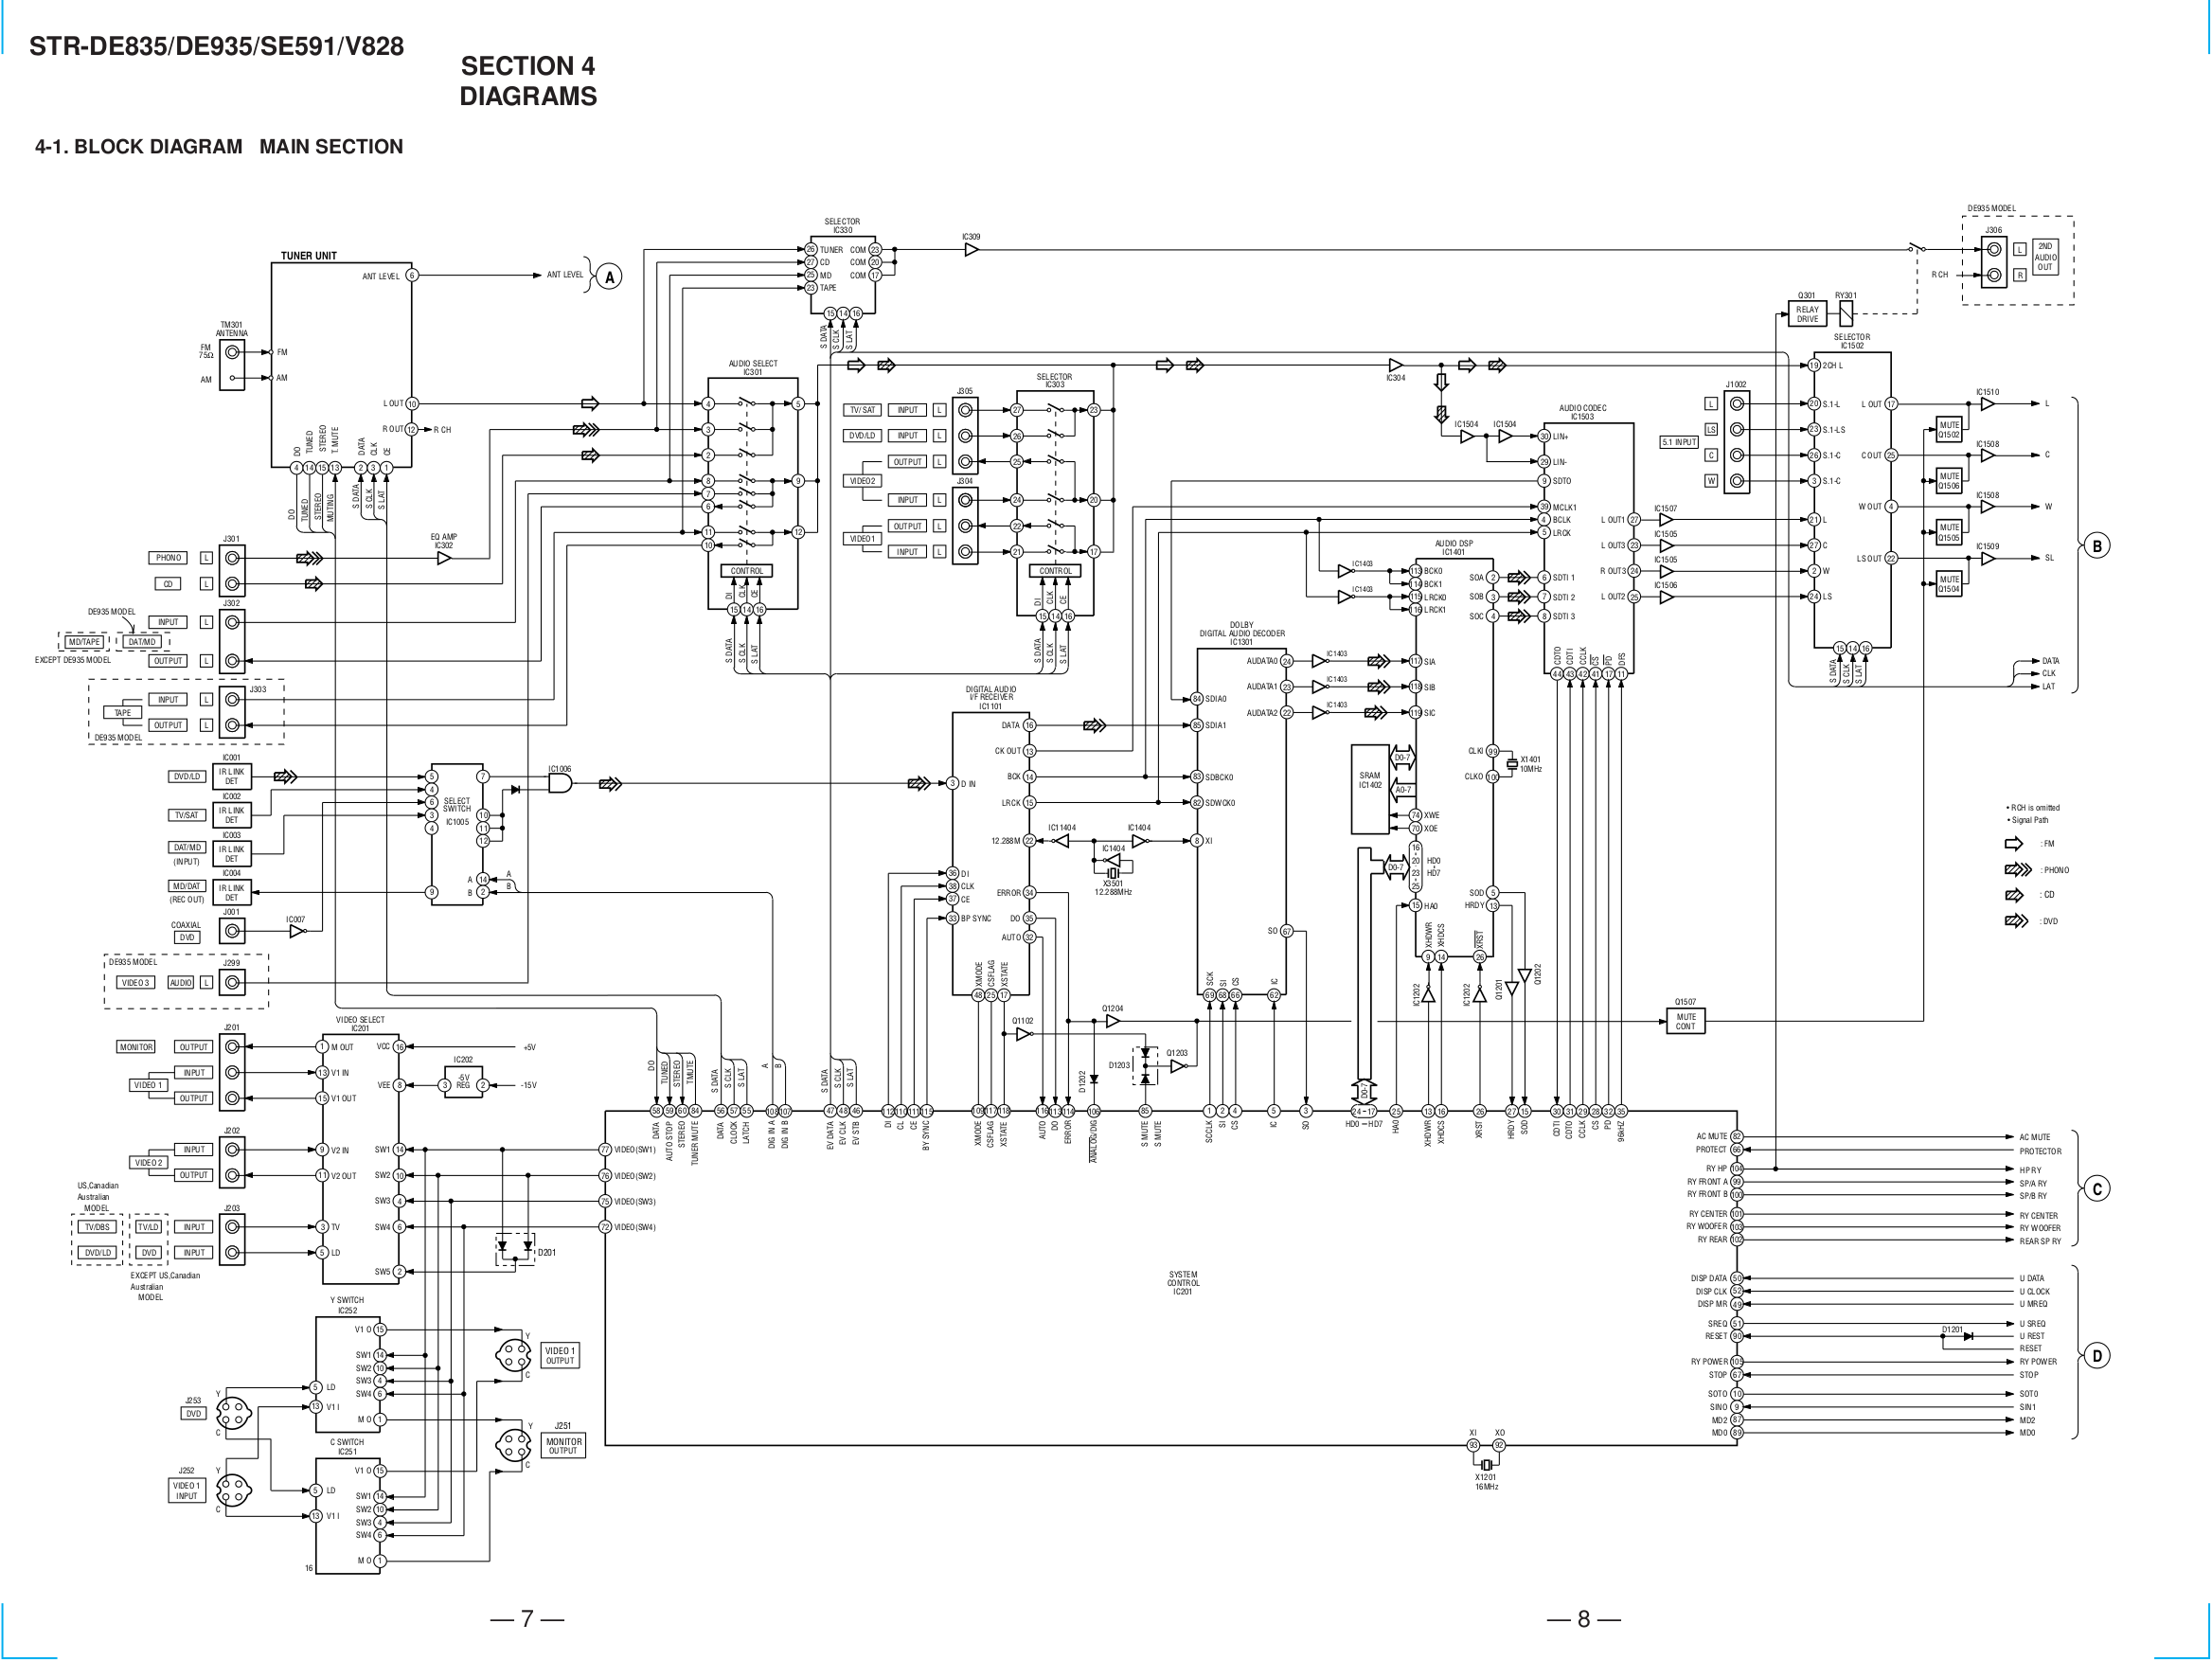 PDF manual for Sony Remote Control RM-LJ302